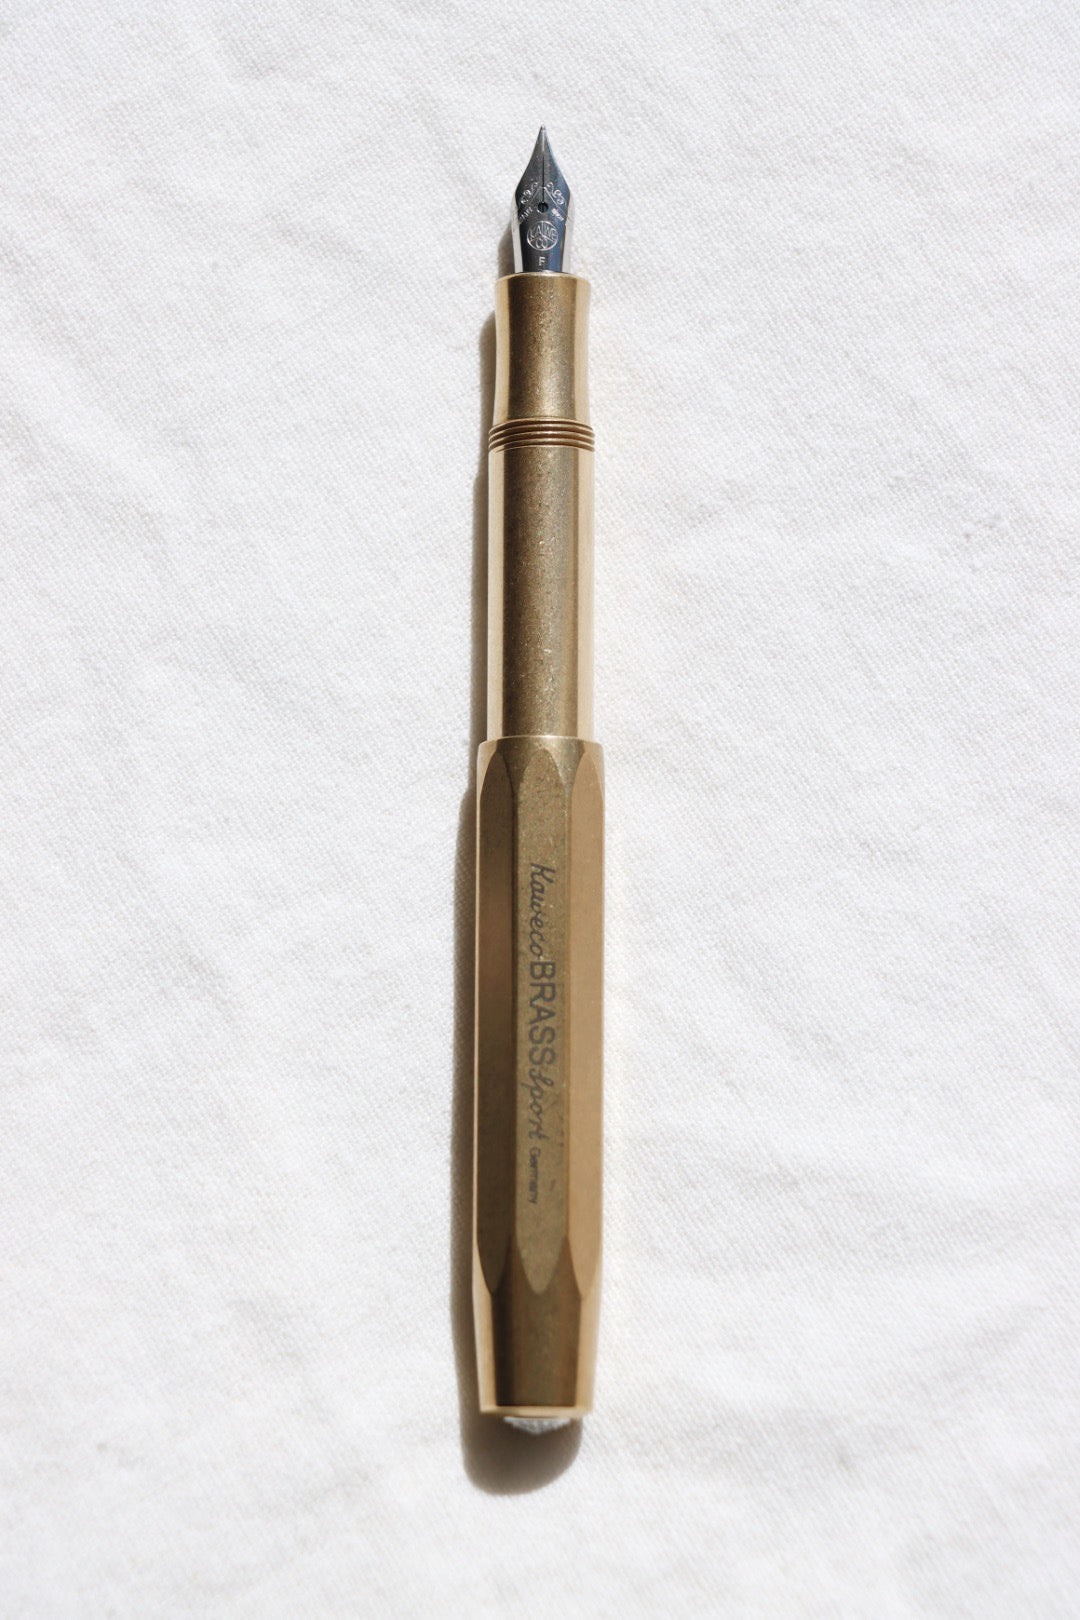  Kaweco BRASS SPORT Fountain Pen I Exclusive Brass